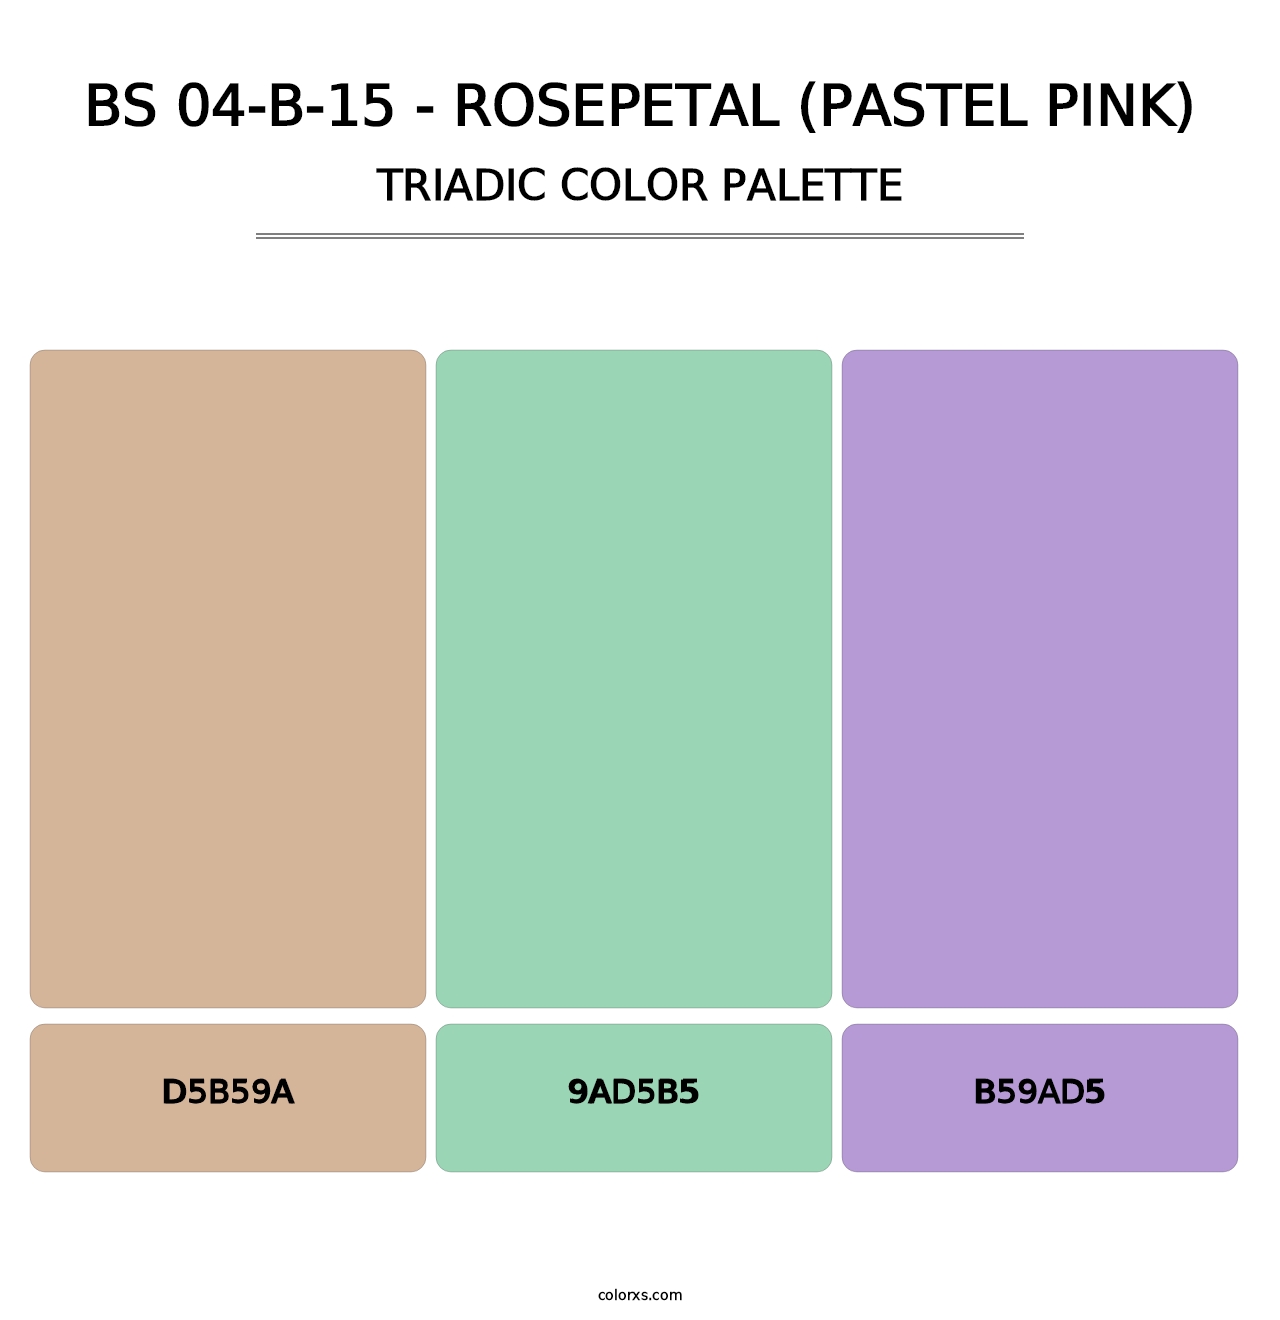 BS 04-B-15 - Rosepetal (Pastel Pink) - Triadic Color Palette